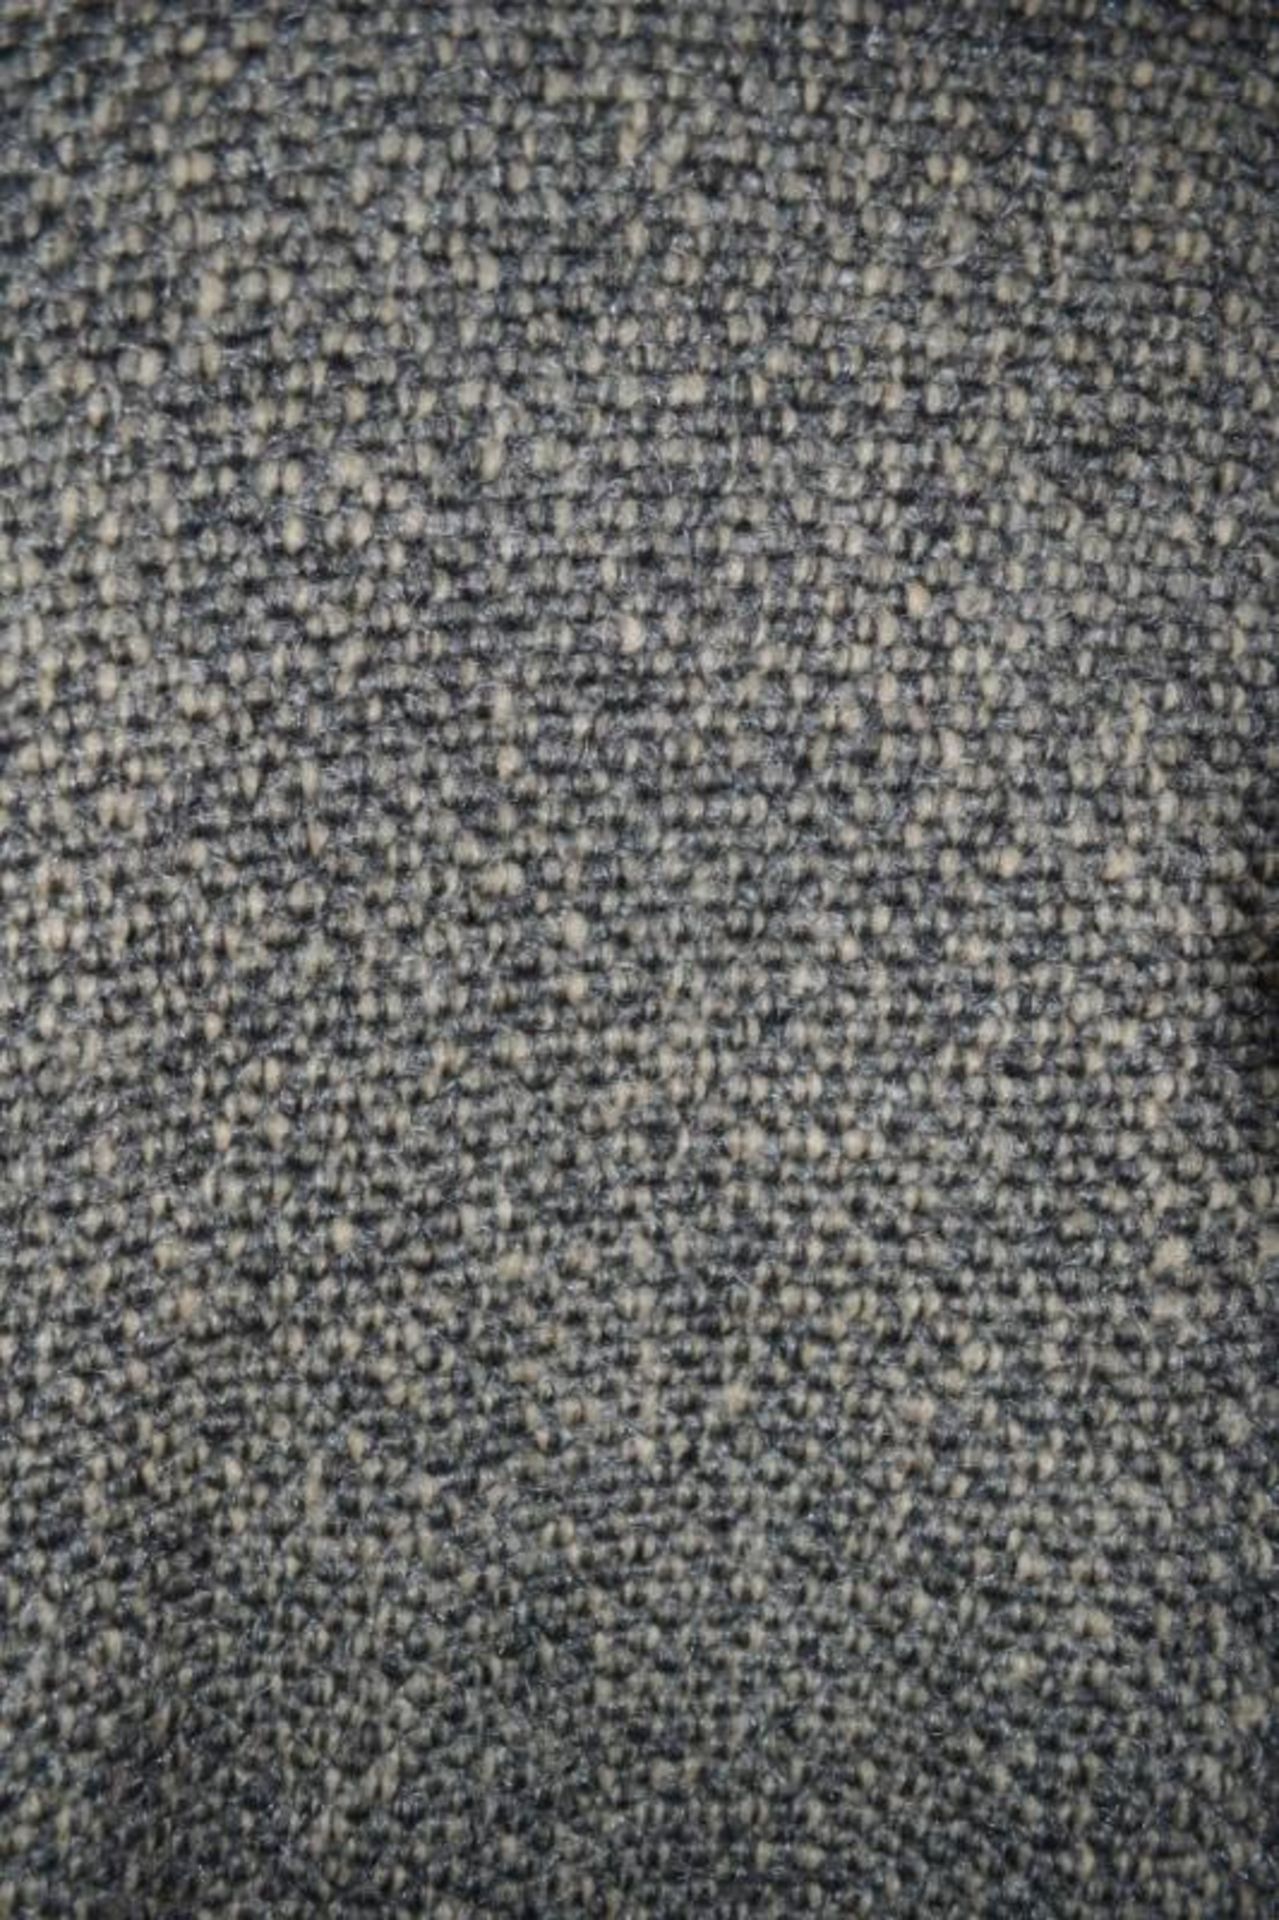 1 x Steilmann Womens Knitted Wool Blend Winter Coat - 87cm Long - Colour: Camel & Metallic Grey - UK - Image 2 of 4